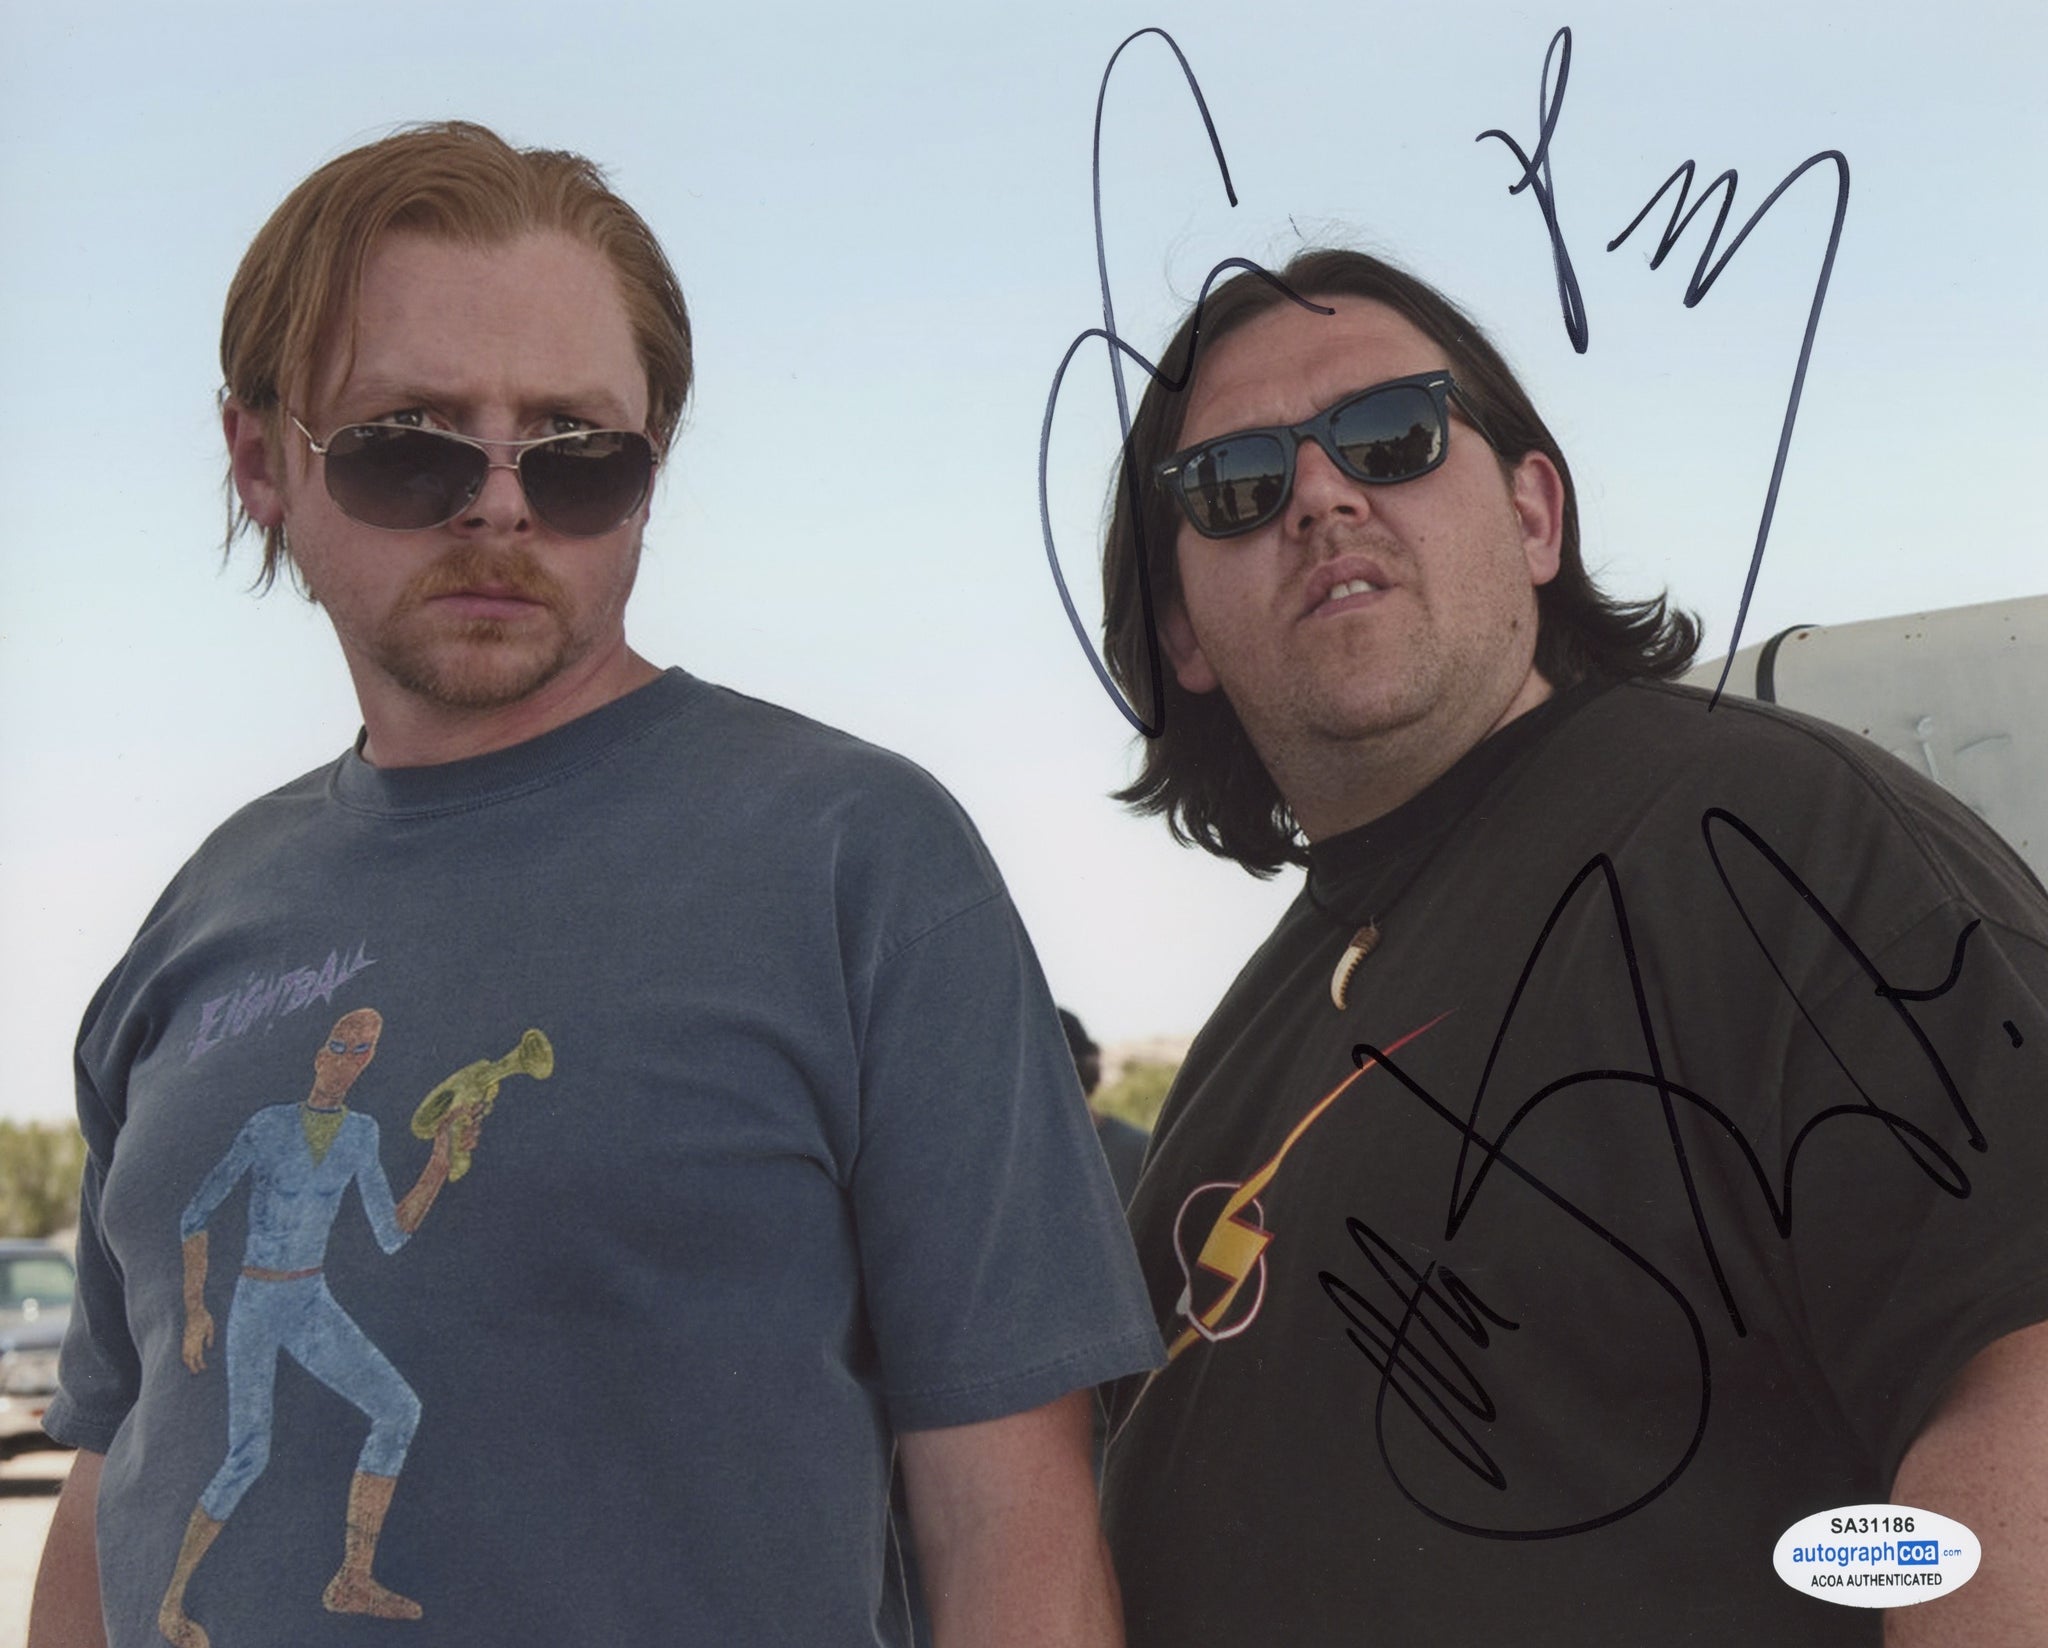 Nick Frost Simon Pegg Paul Signed Autograph 8x10 Photo ACOA #8 - Outlaw Hobbies Authentic Autographs